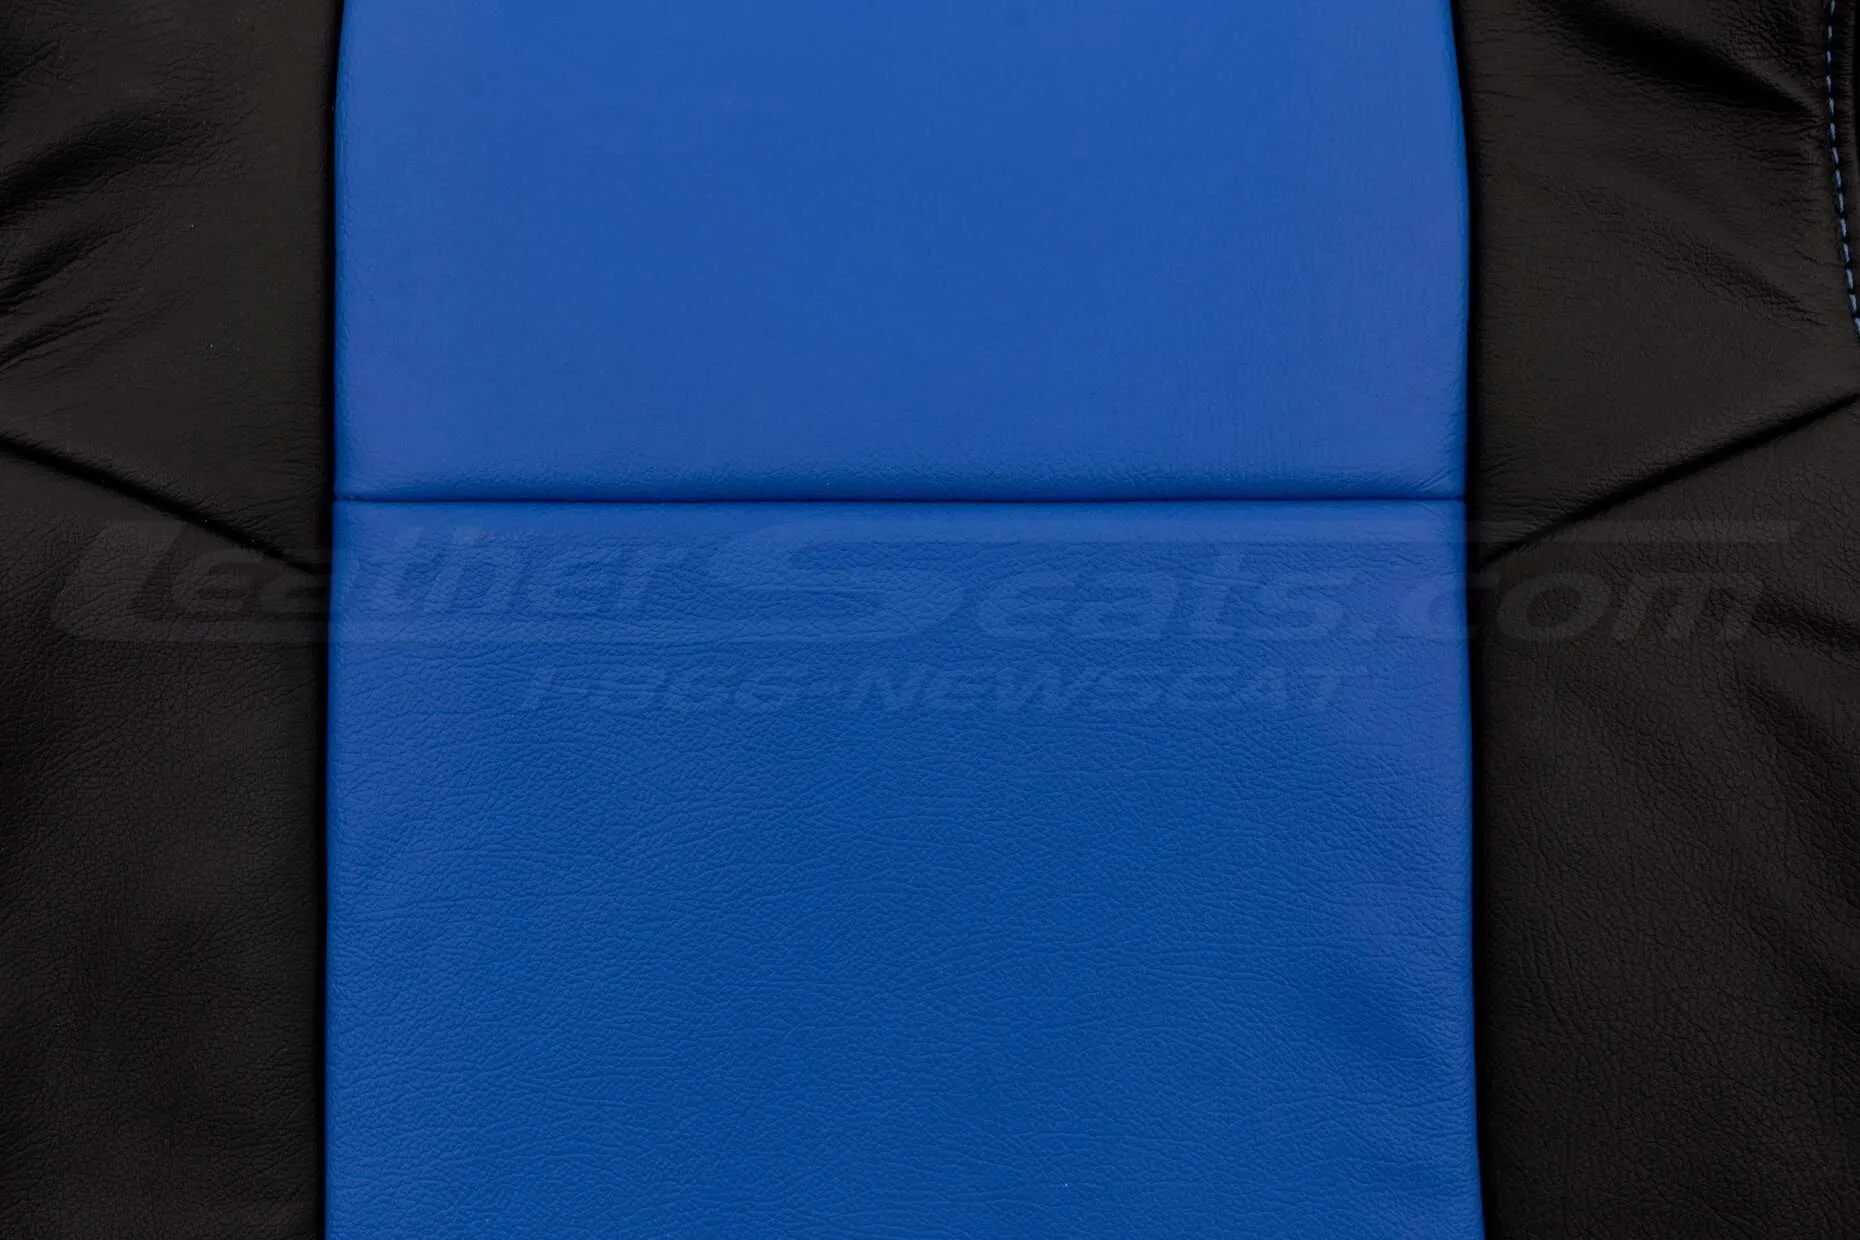 05-08 Toyota Tacoma Leather Kit - Black & Cobalt - Insert close-up